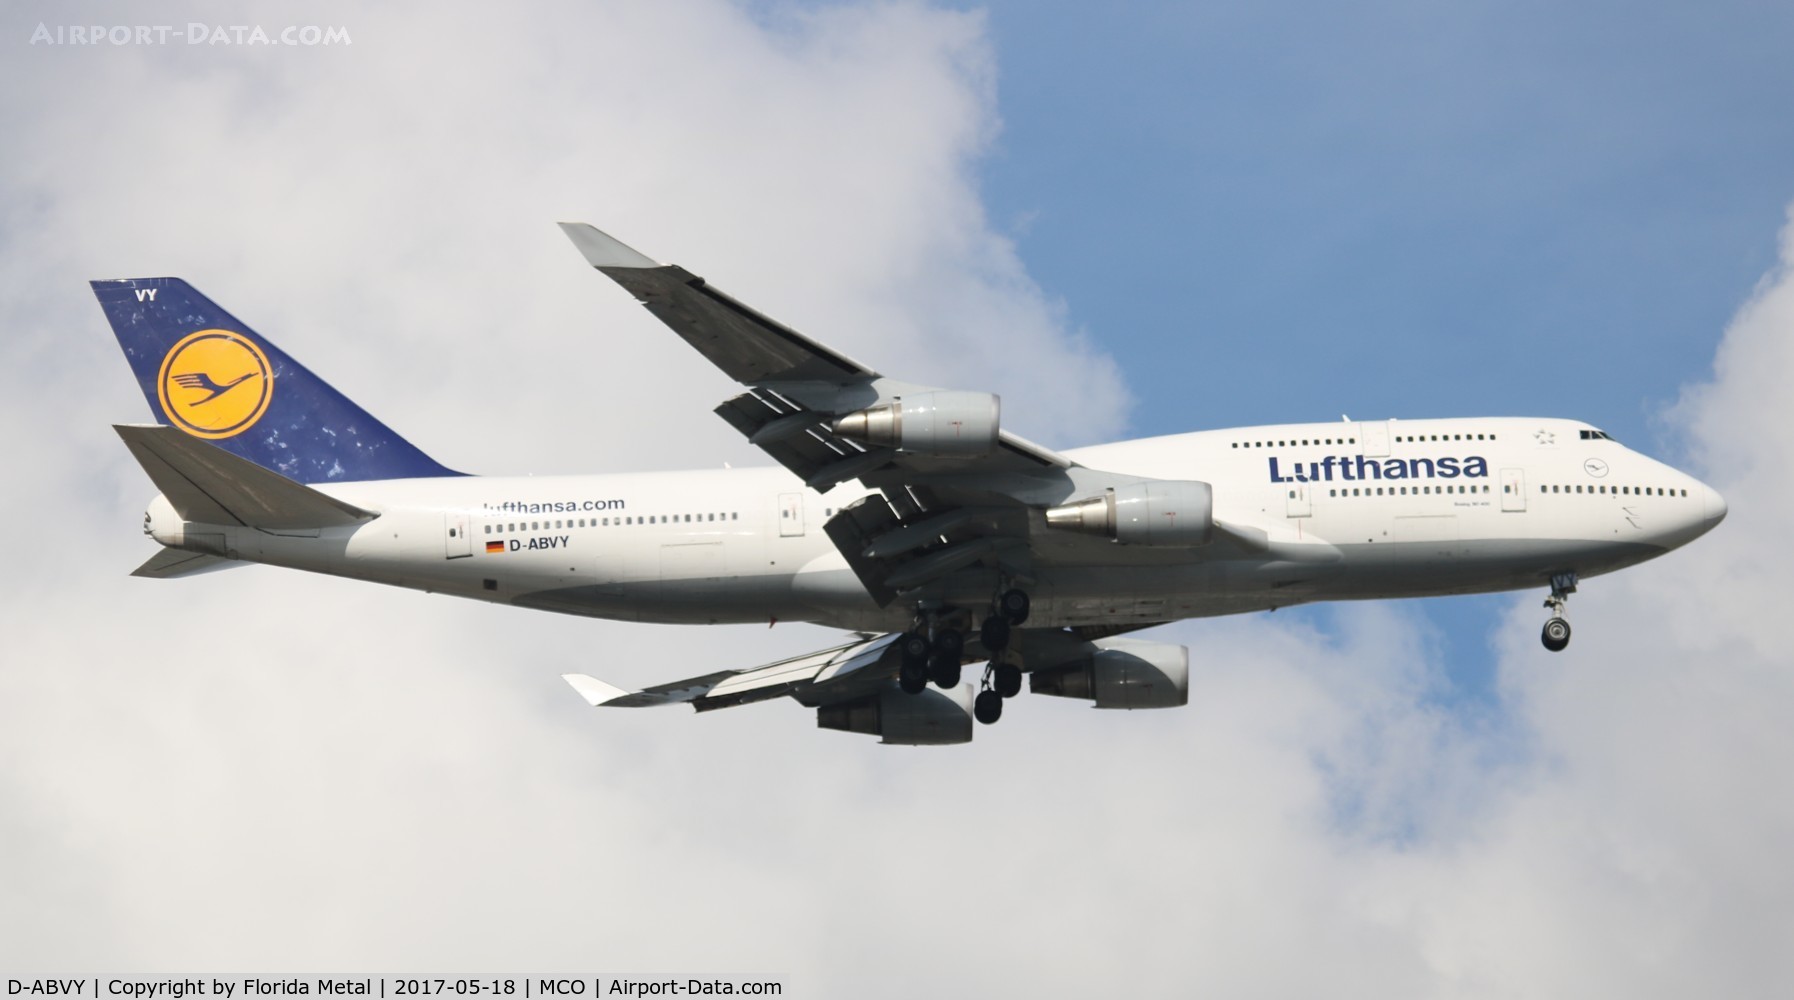 D-ABVY, 2000 Boeing 747-430 C/N 29869, Lufthansa